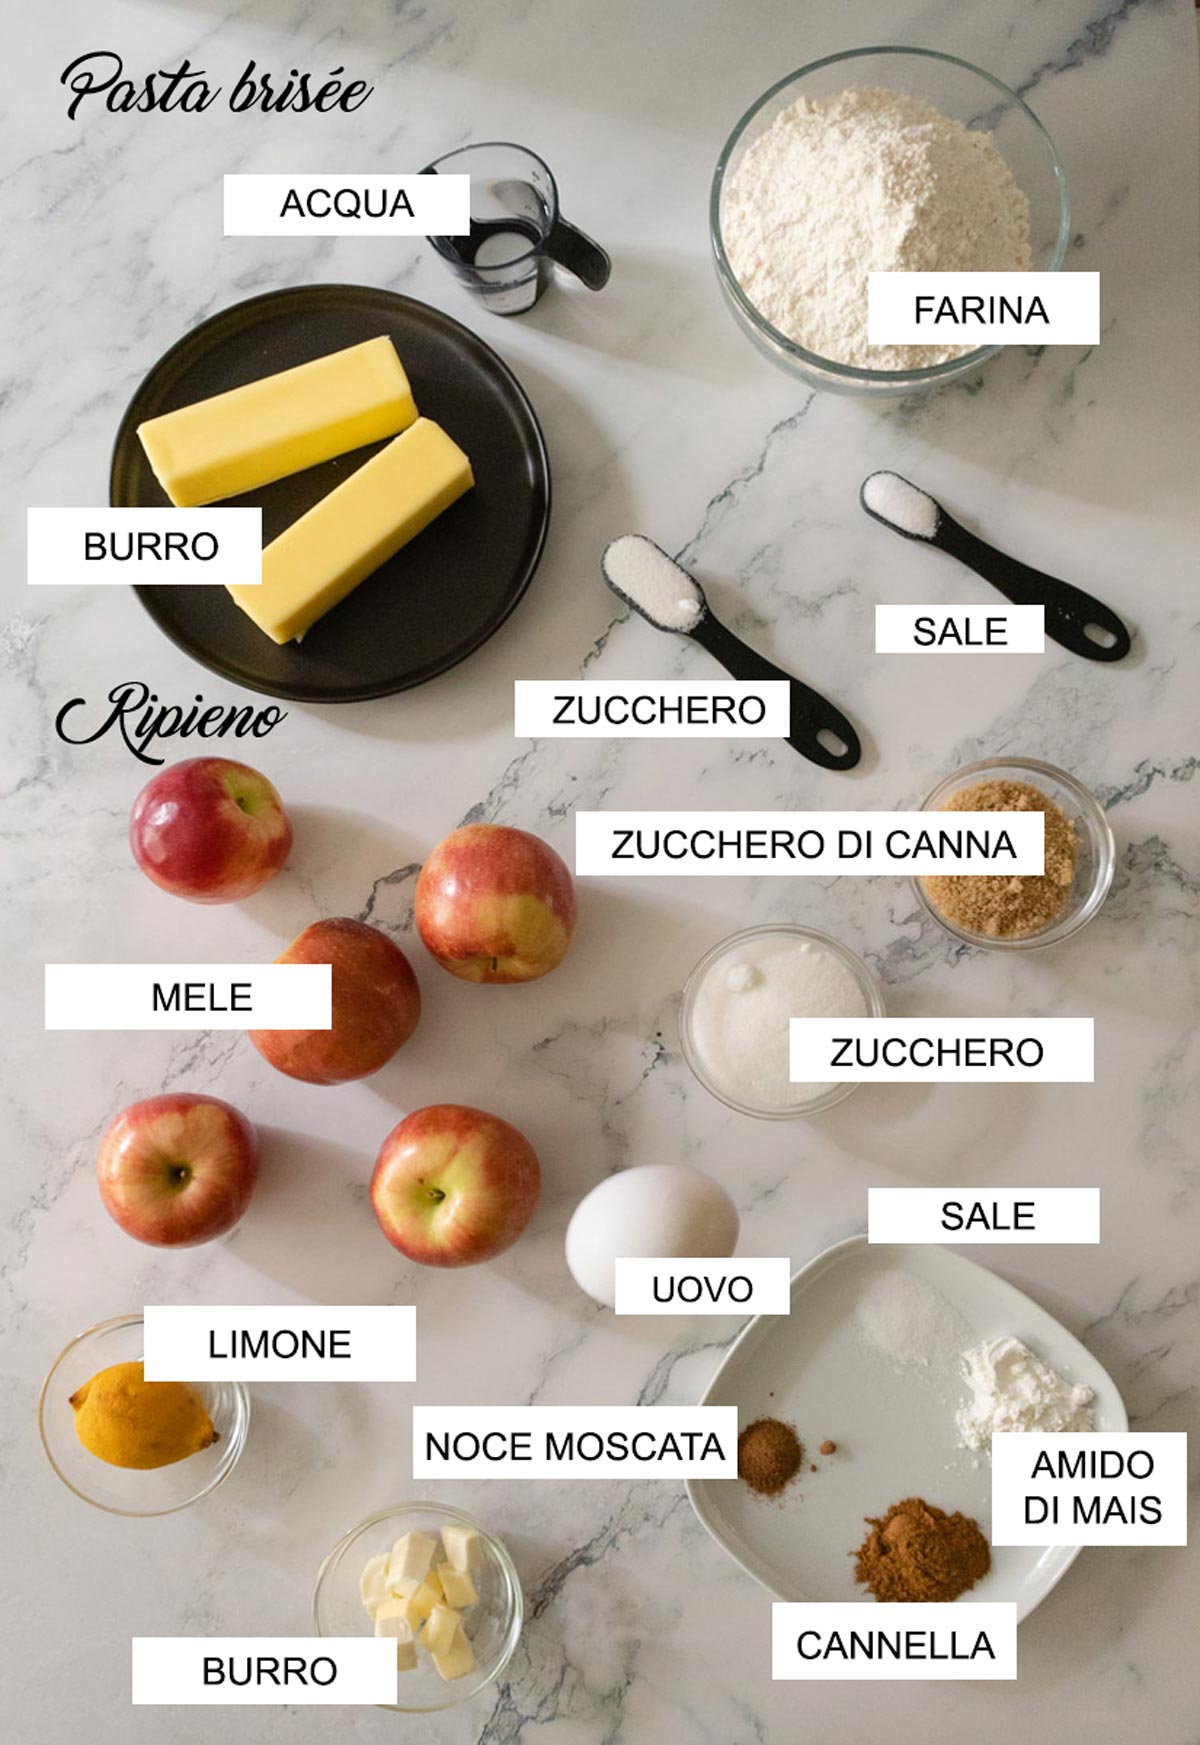 Ingredienti per l'Apple pie, etichettati per nome.